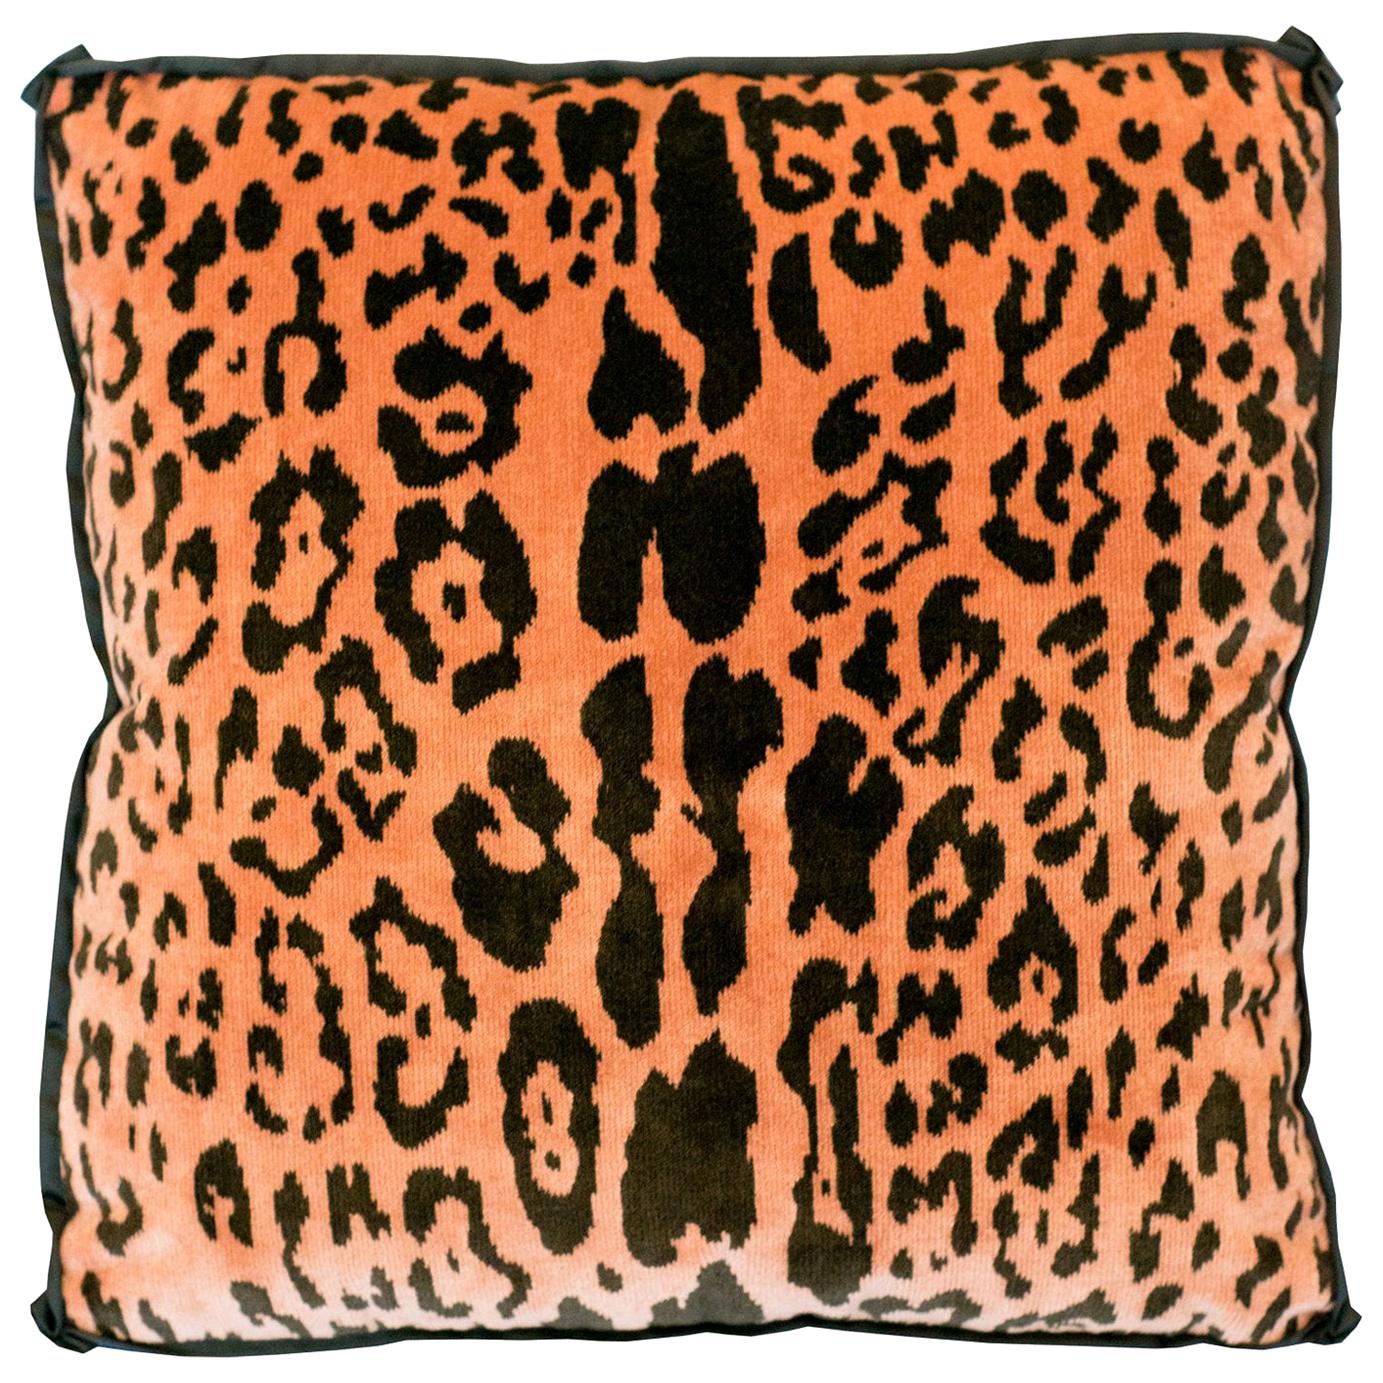 Studio Maison Nurita Coral Pink Bevilacqua Leopard Silk Velvet and Satin Pillows